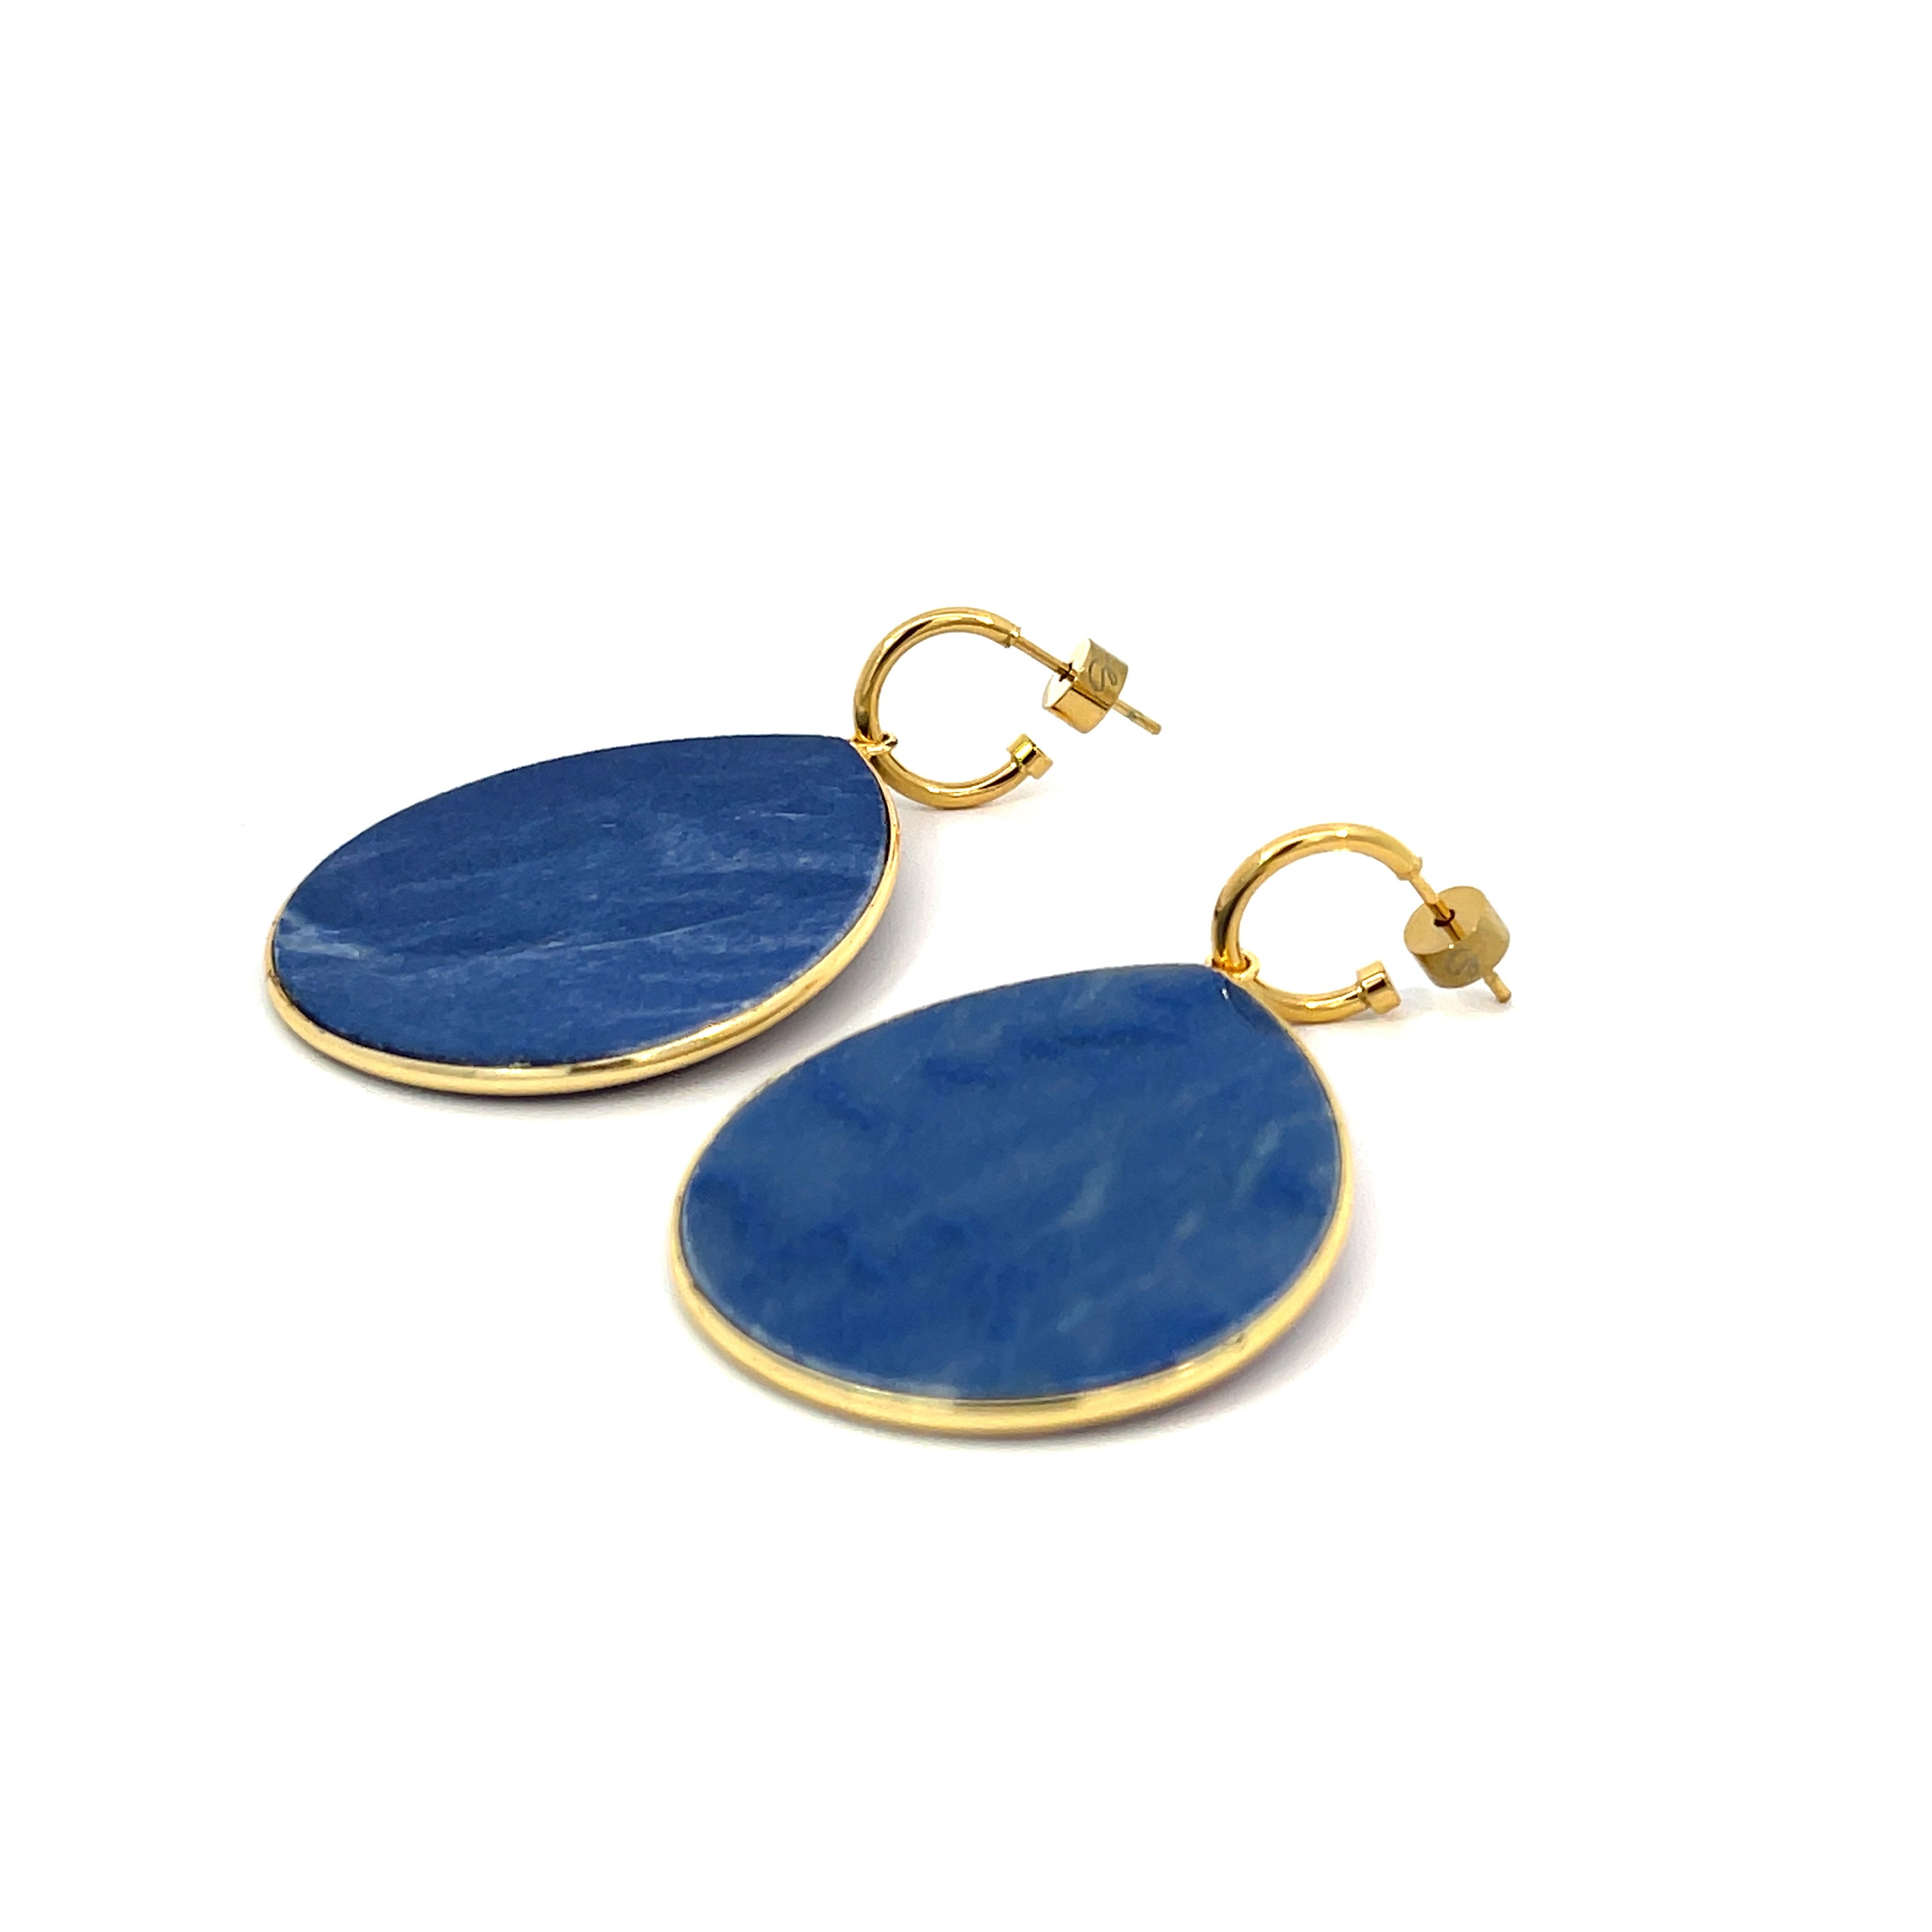 Shop Gosia Orlowska's Lapis Lazuli Drop Earrings